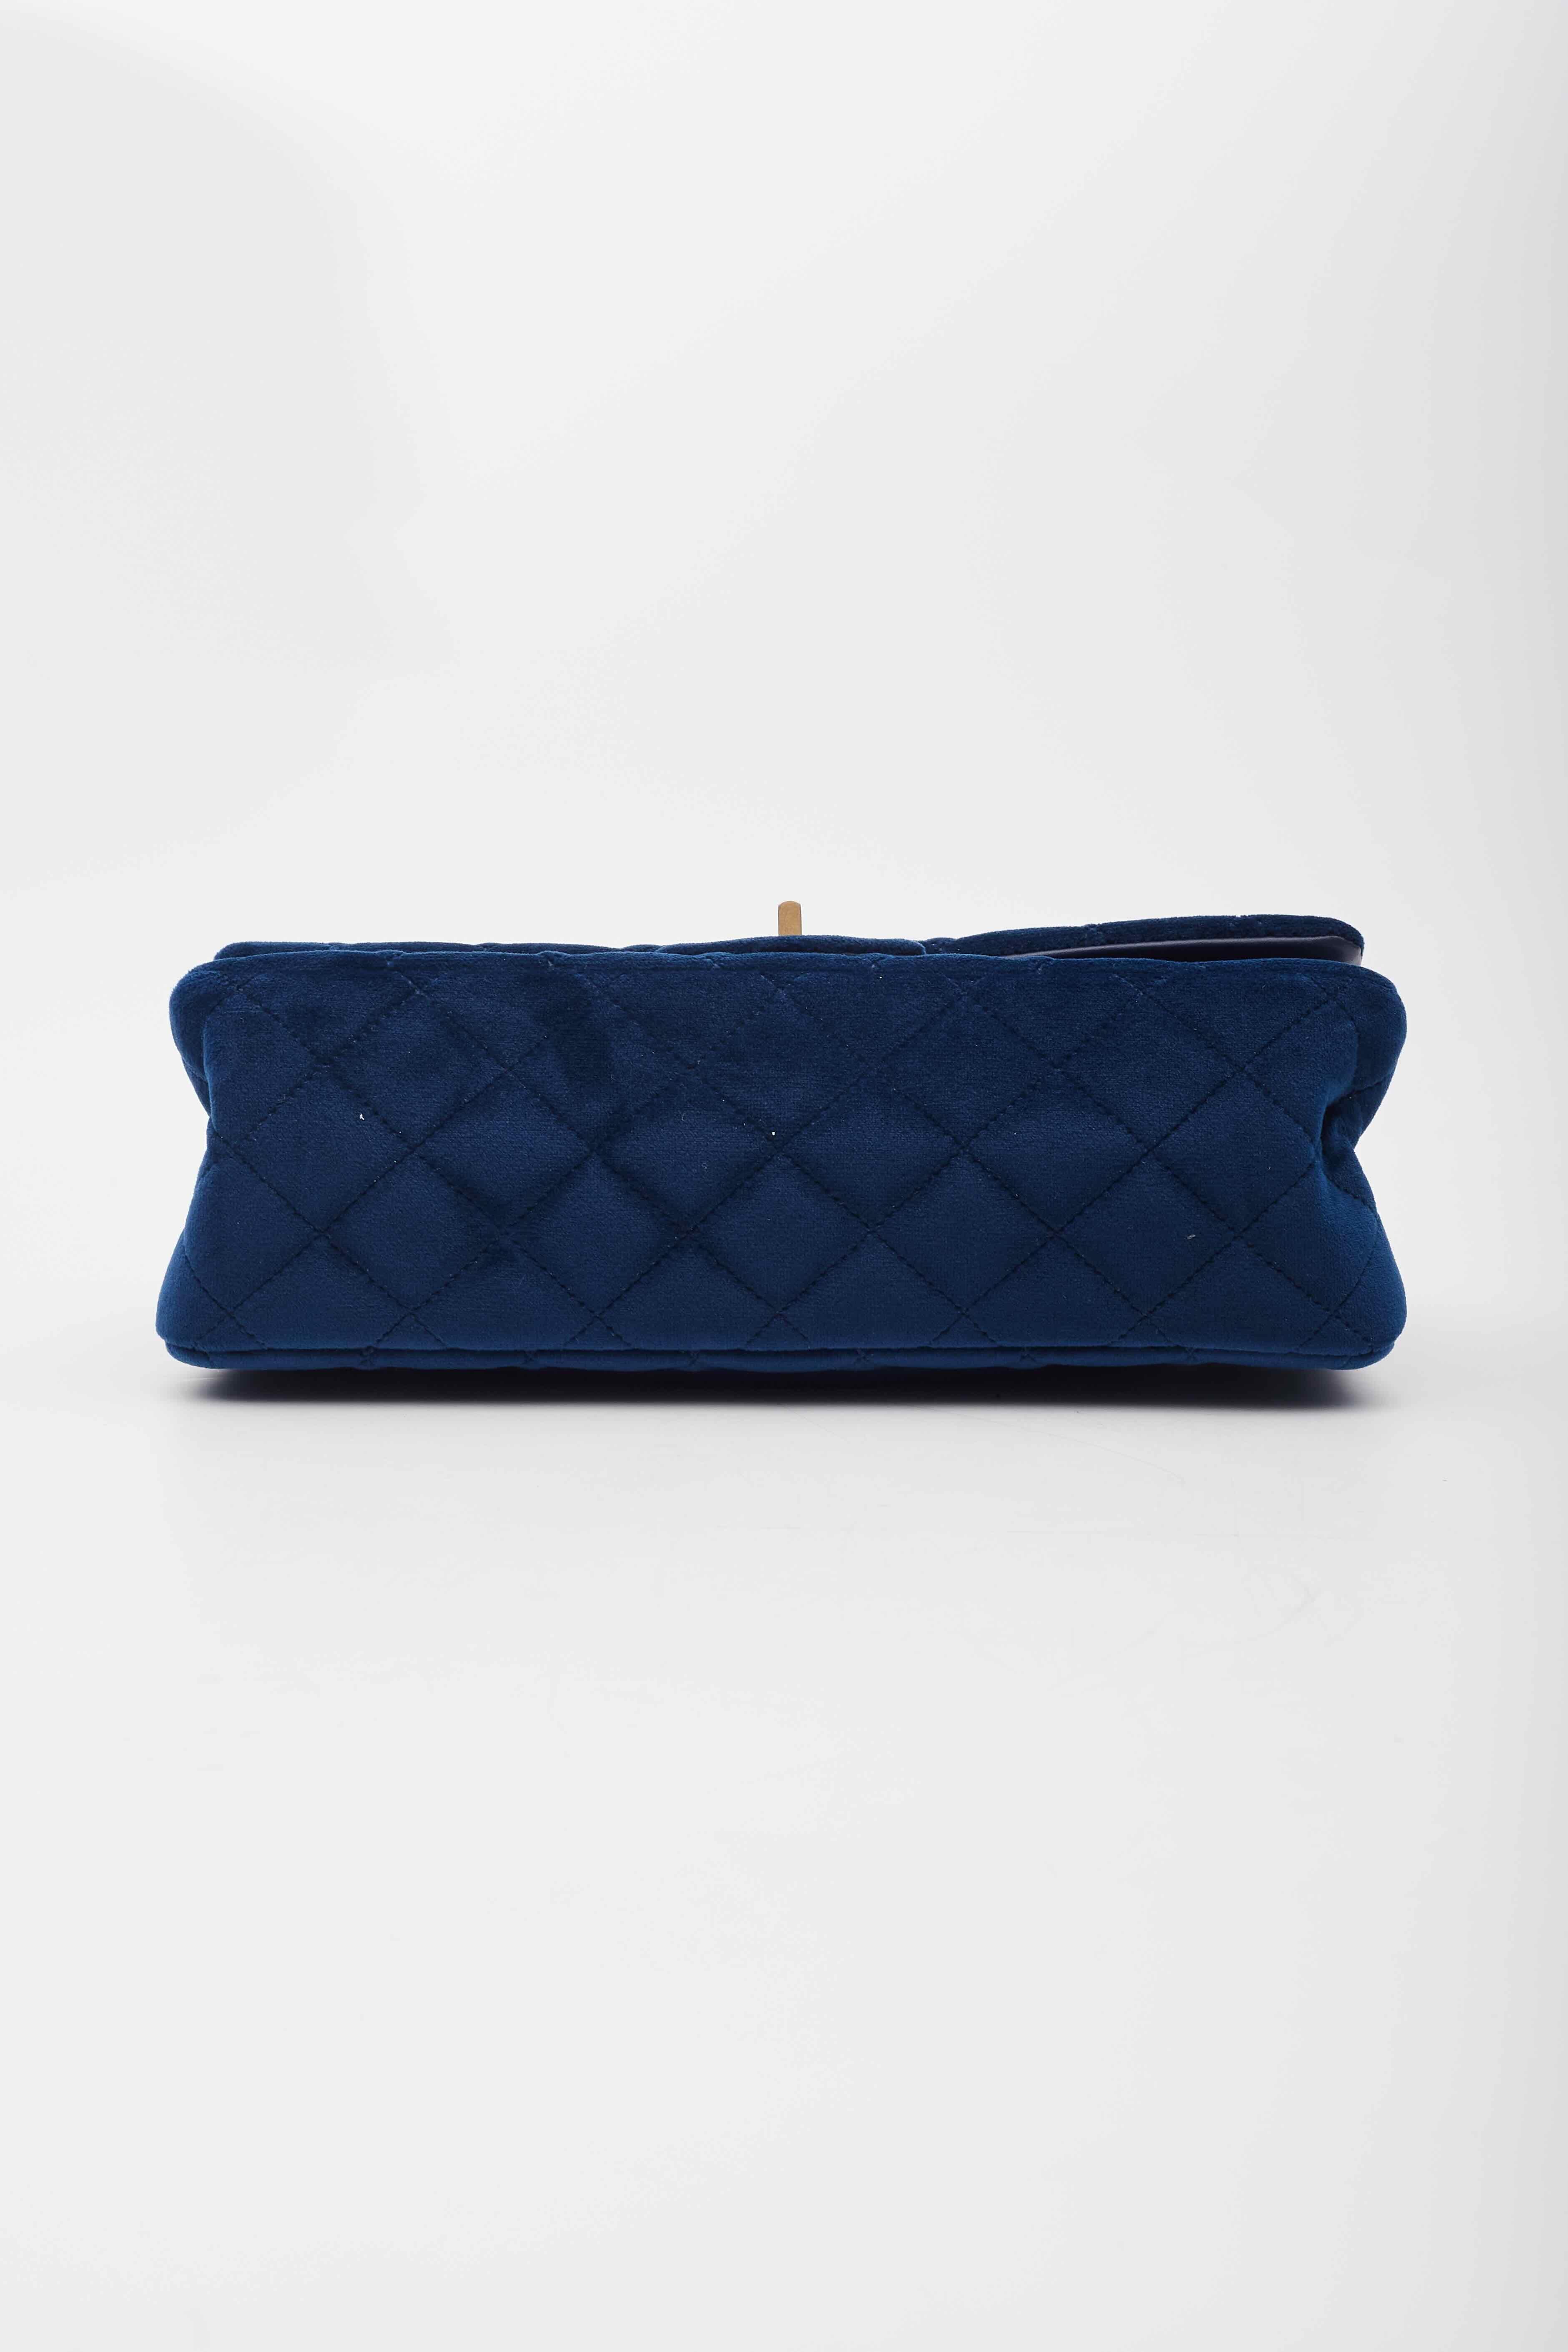 Chanel Velvet Quilted Mini 2.55 Reissue Flap Blue For Sale 1